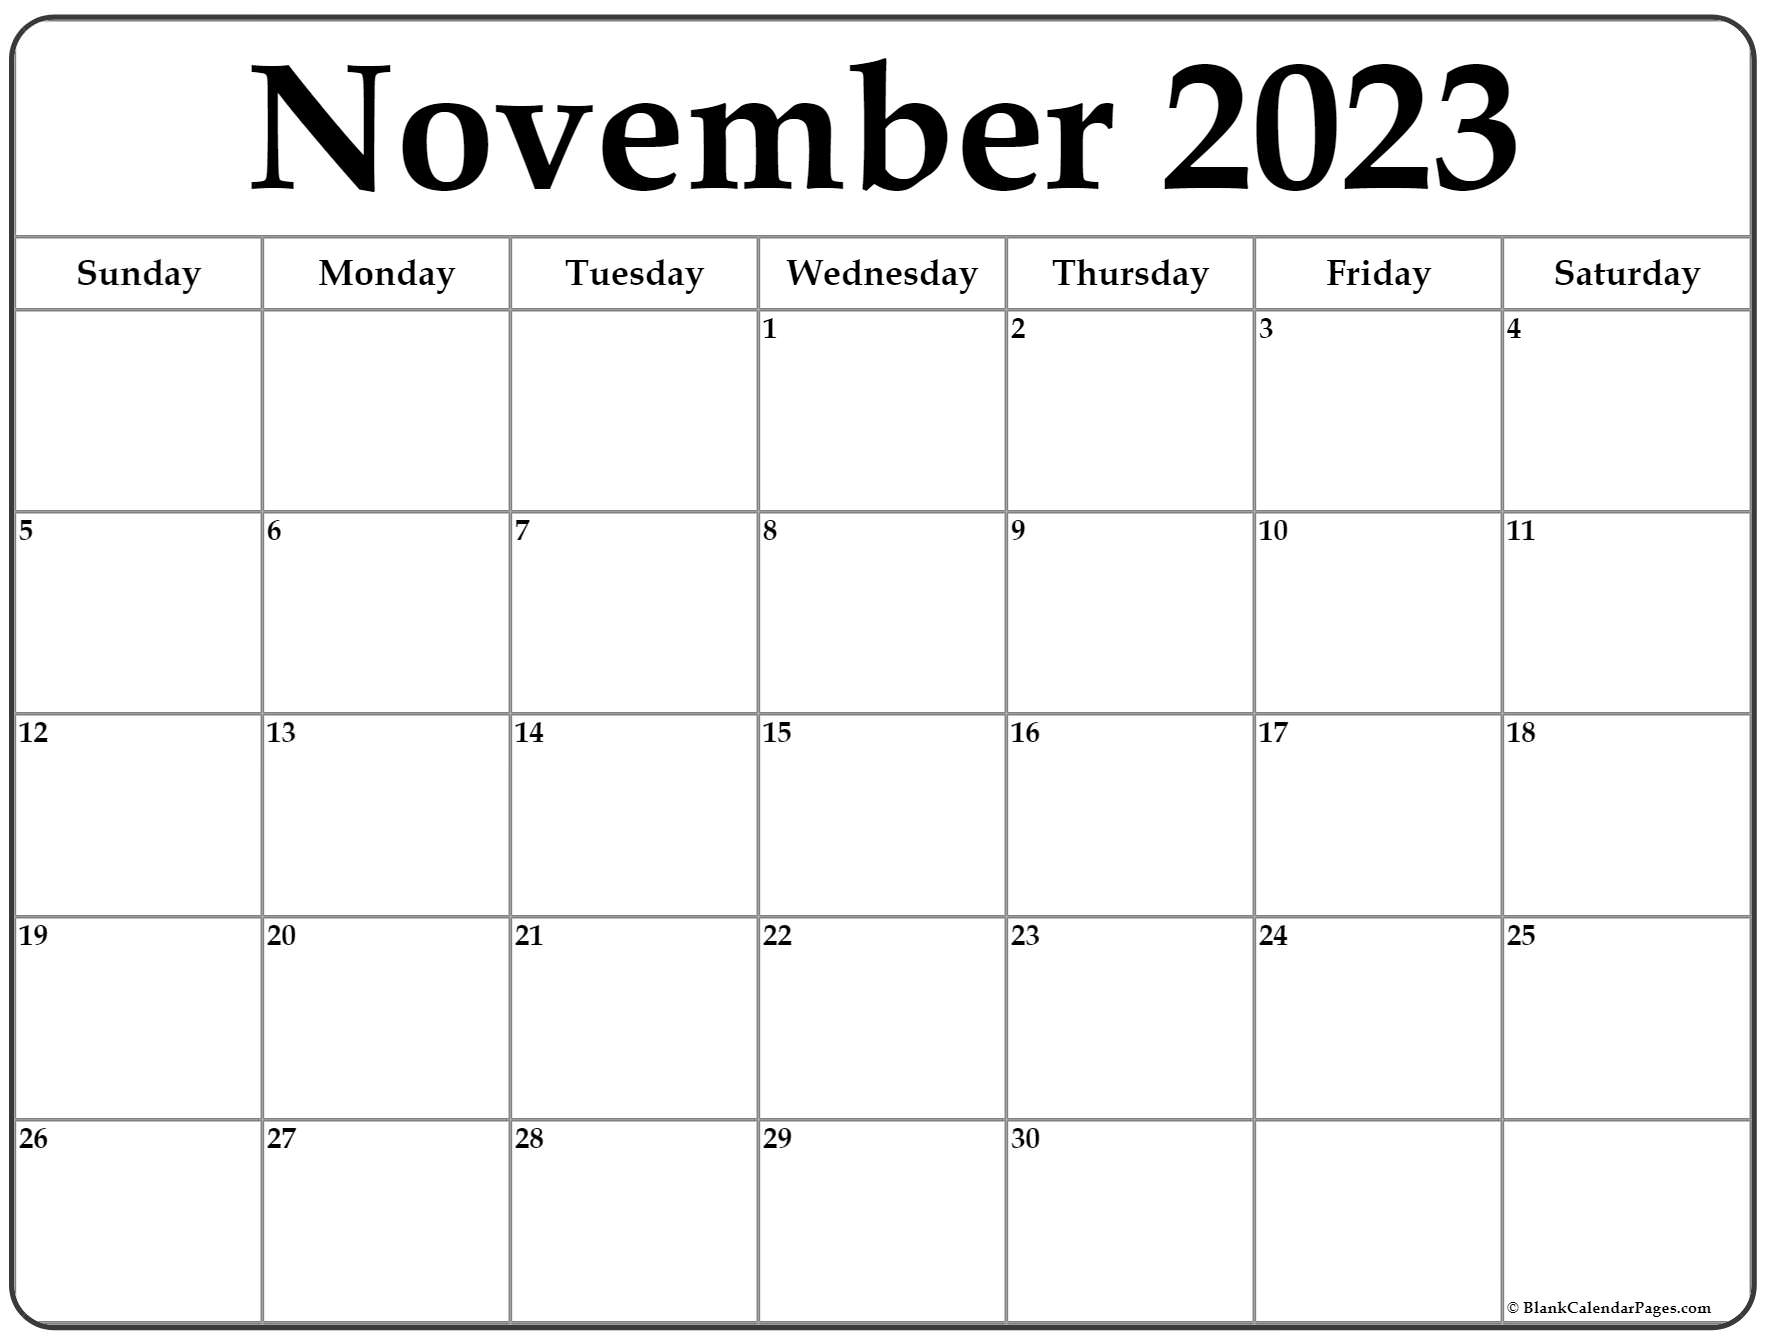 calendar-2023-november-printable-free-get-calendar-2023-update